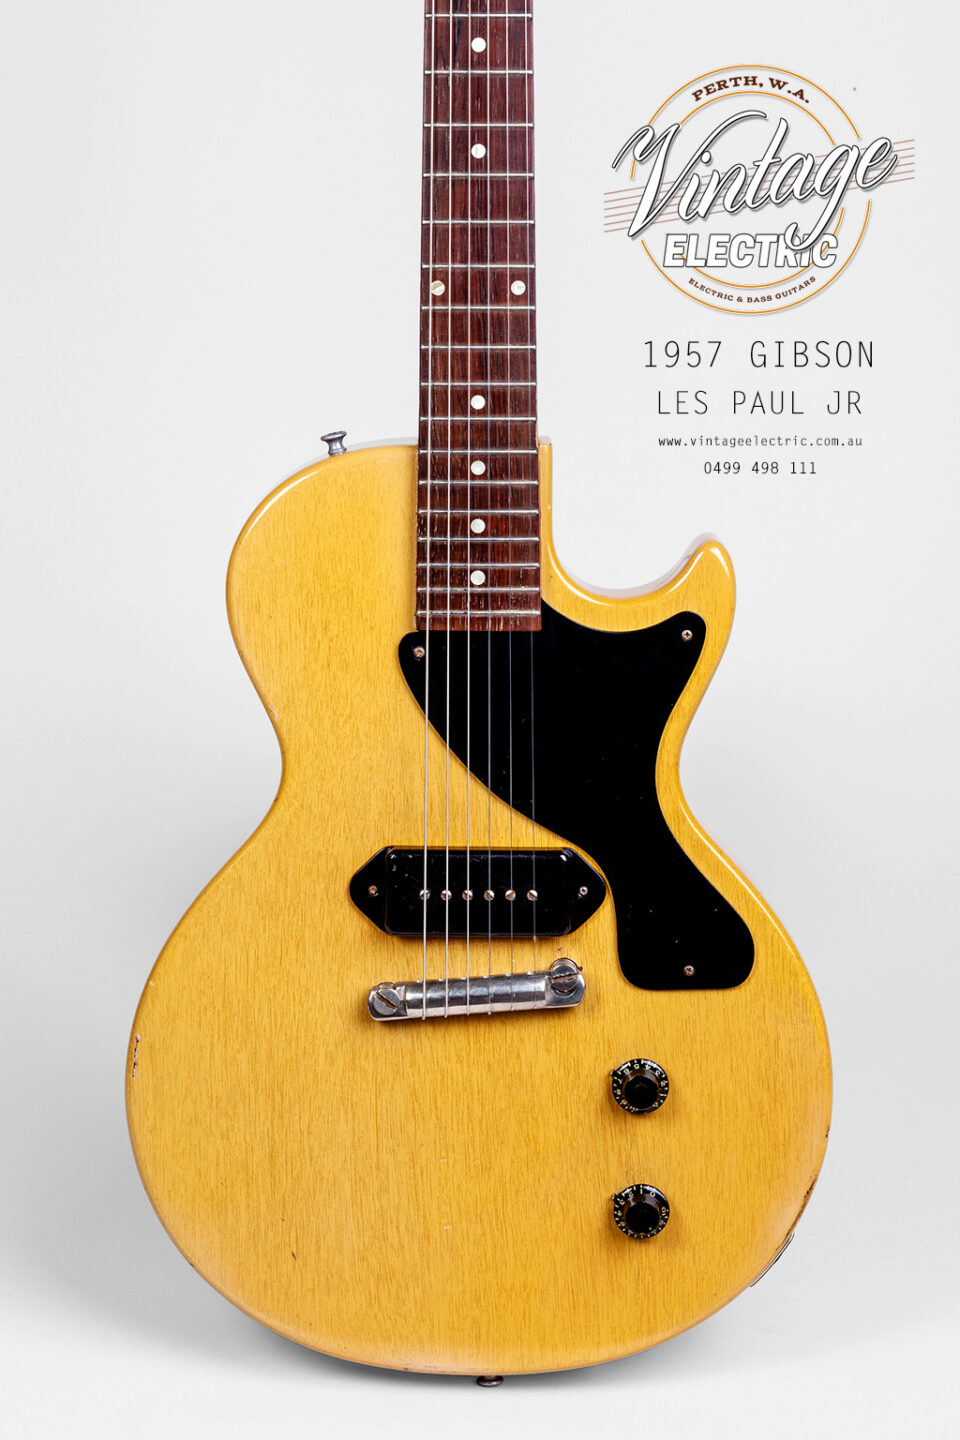 1957 Gibson Les Paul Jr Body